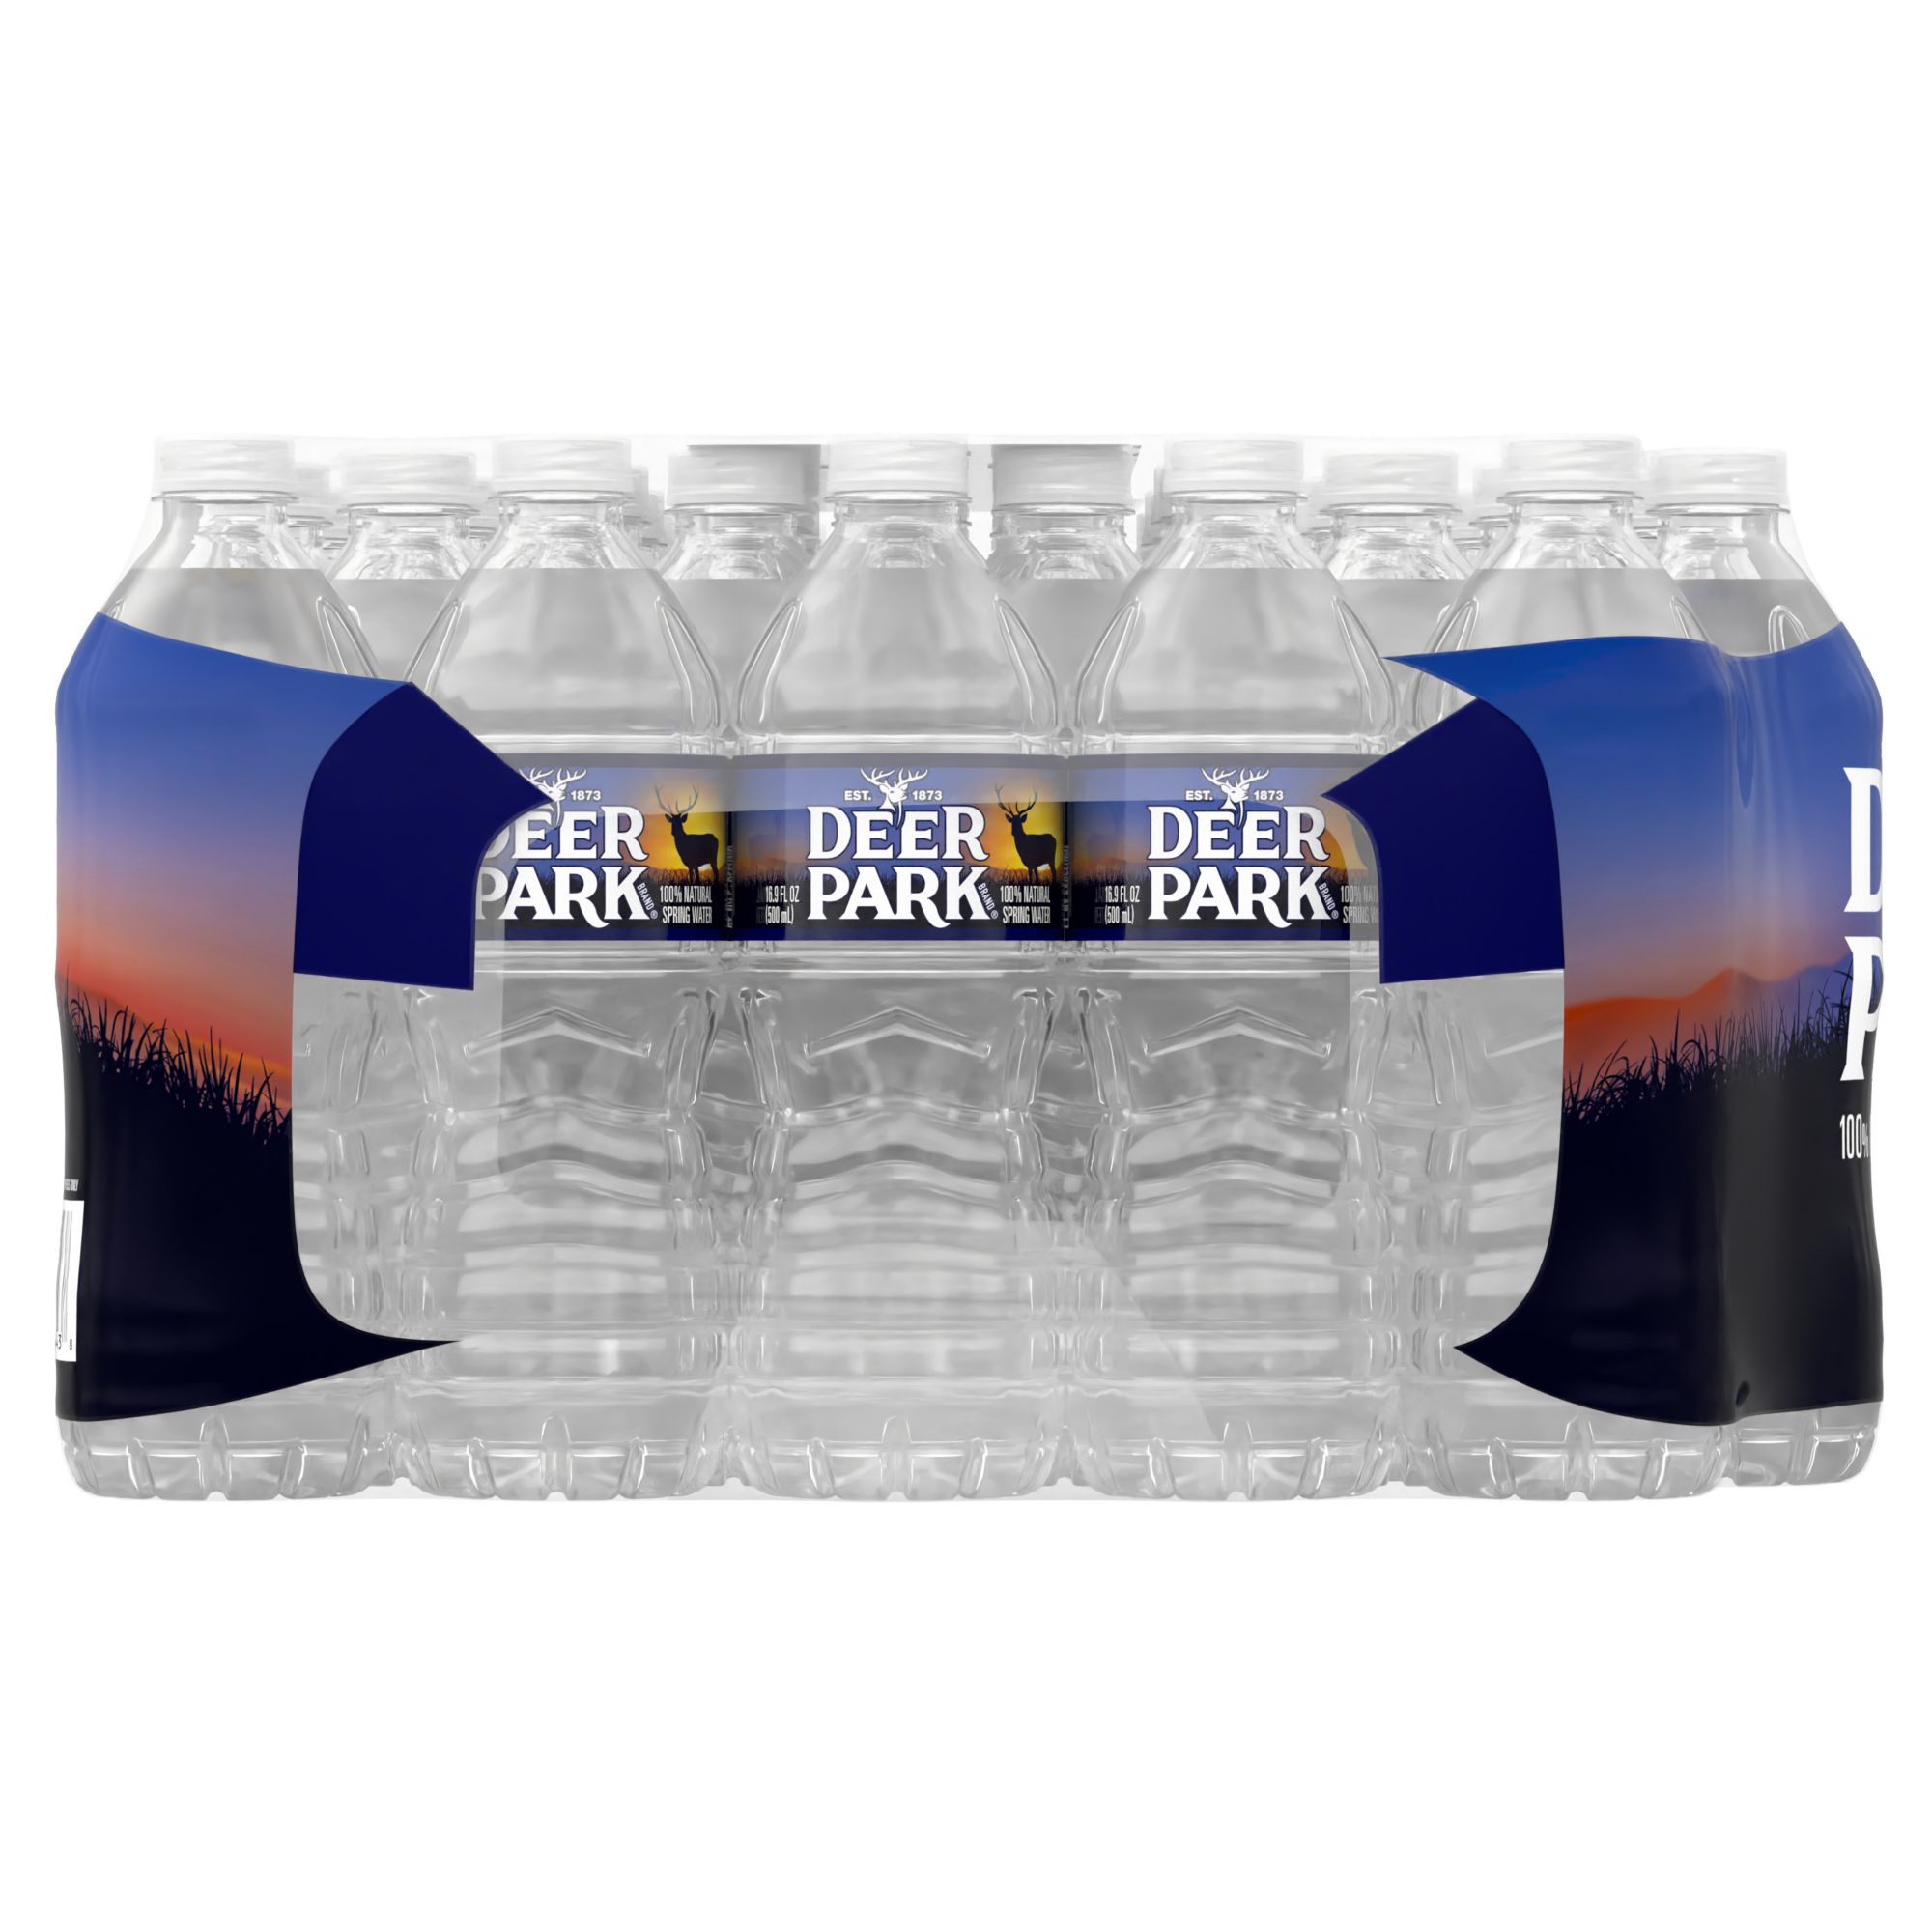 DEER PARK Brand 100% Natural Spring Water, 12-ounce plastic bottles (Pack  of 12)